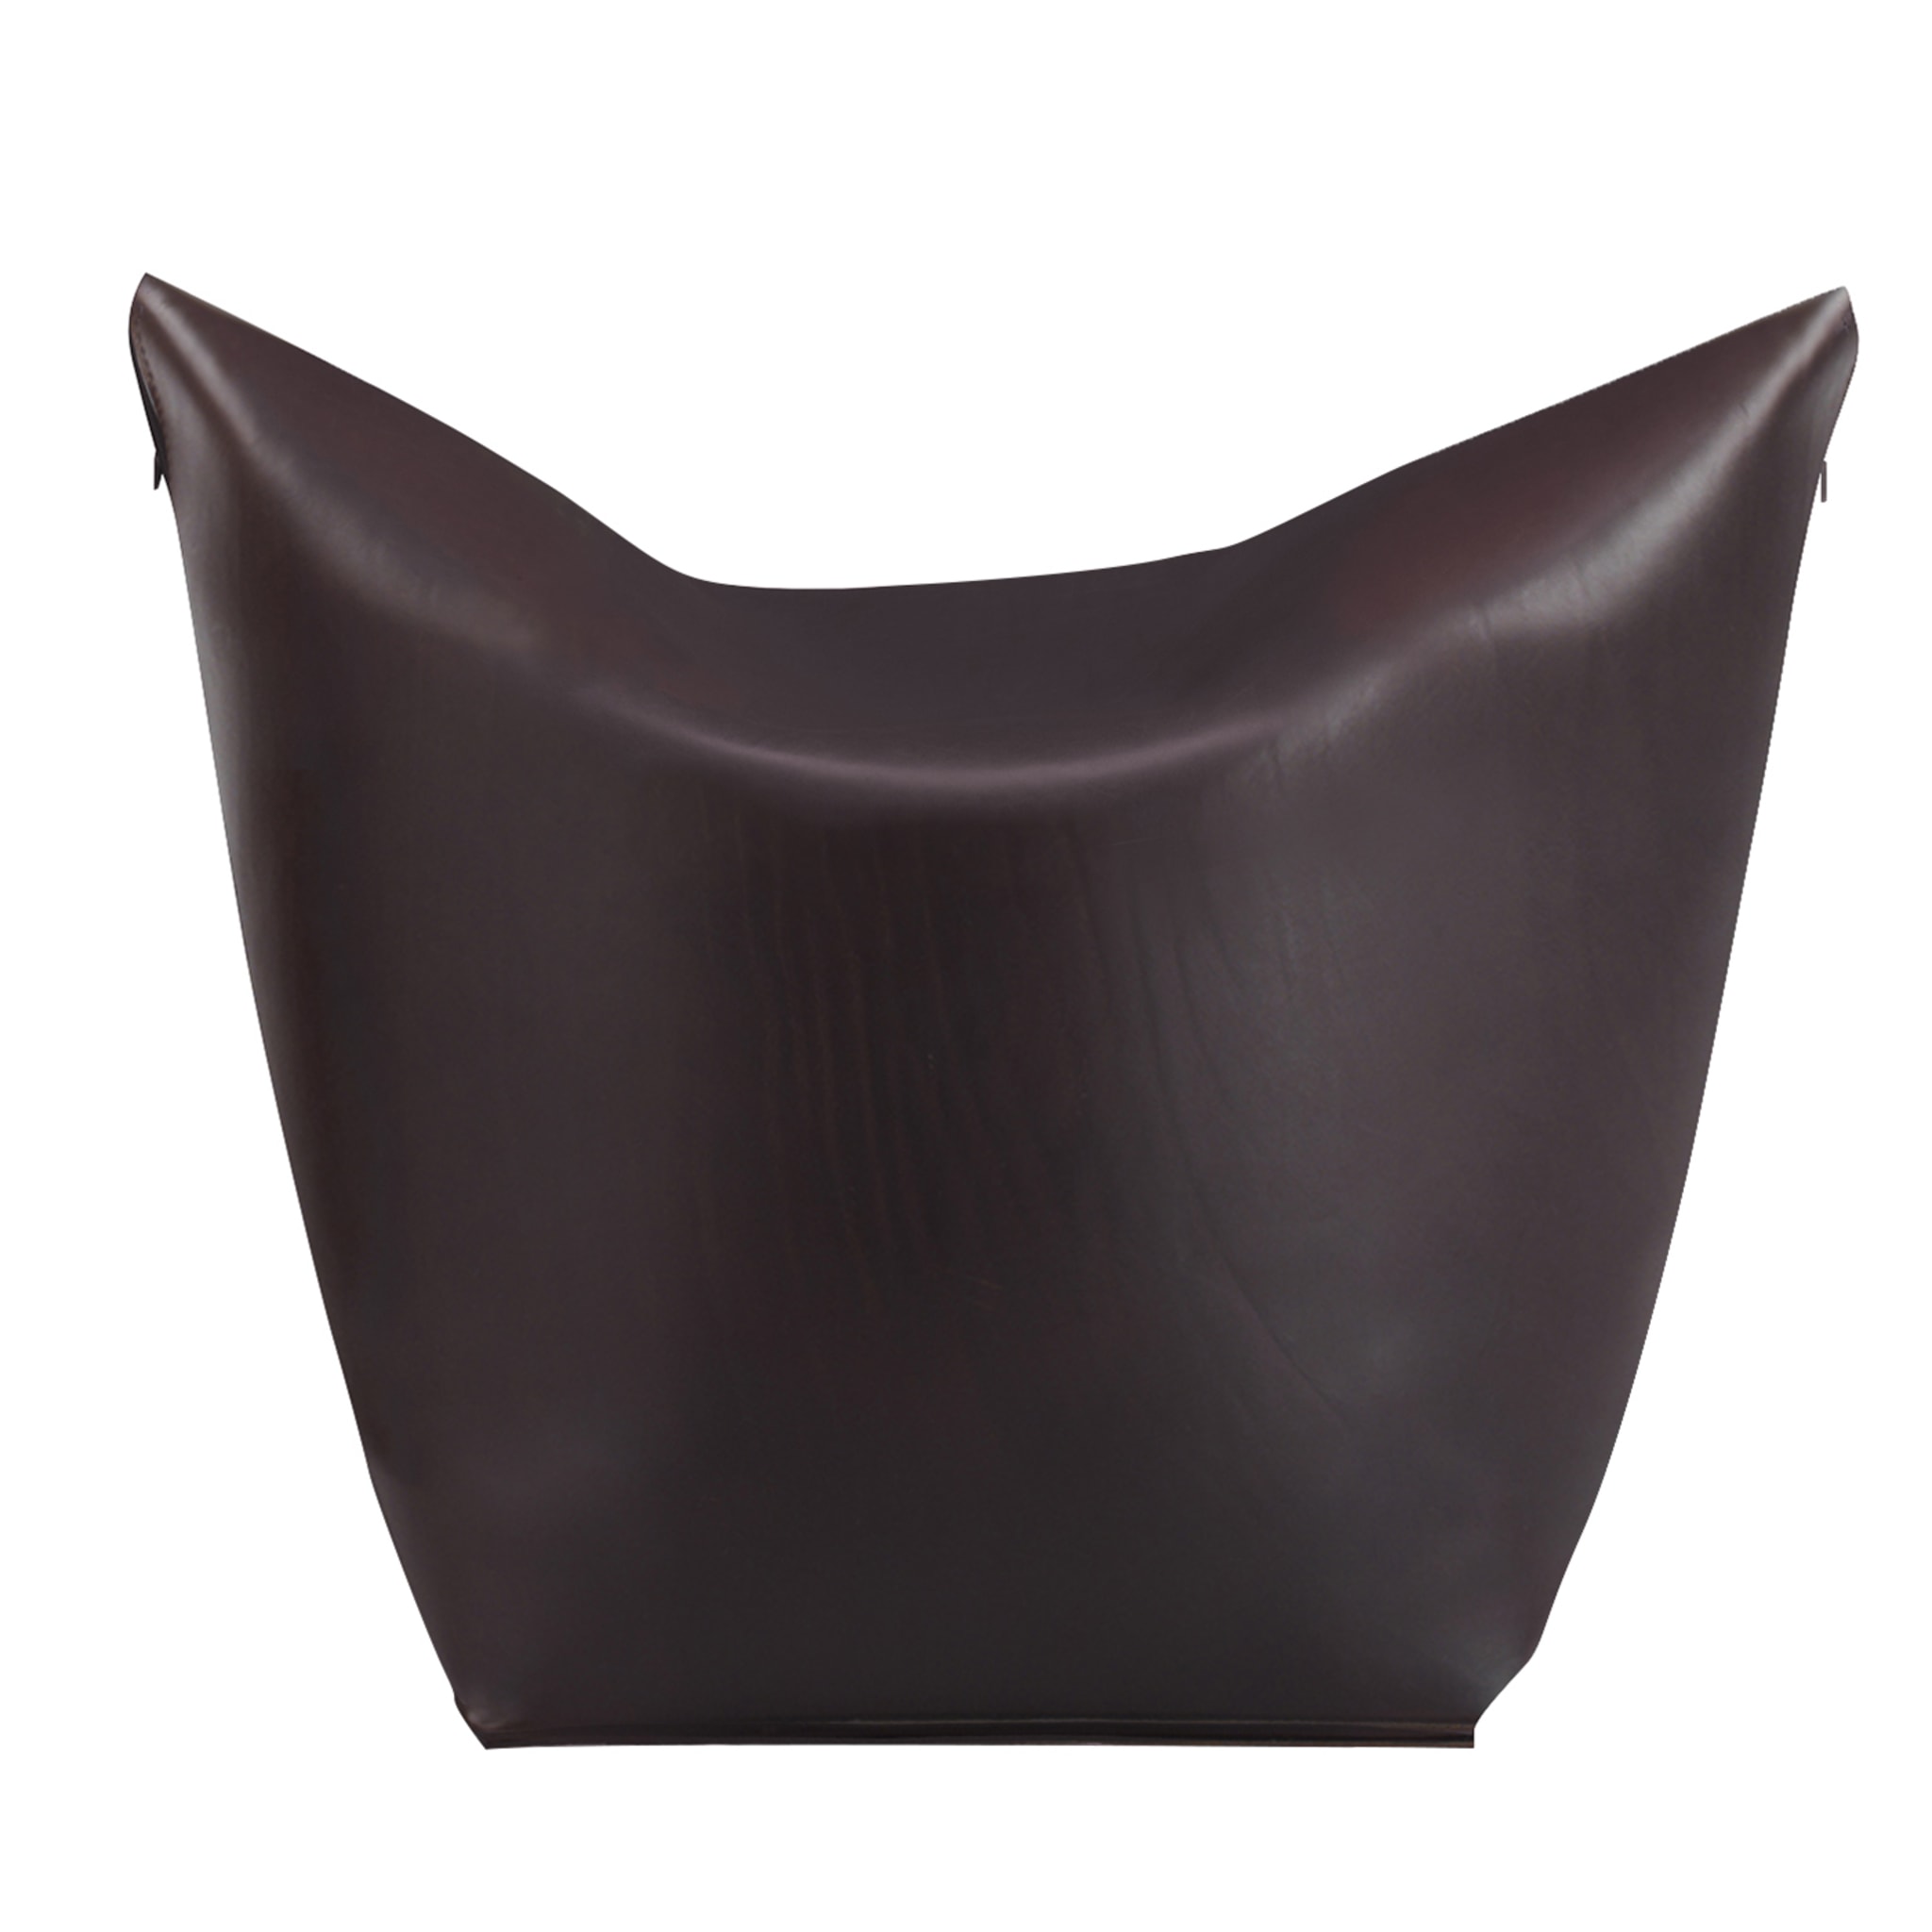 Mao Brown Leather Bean Bag Chair